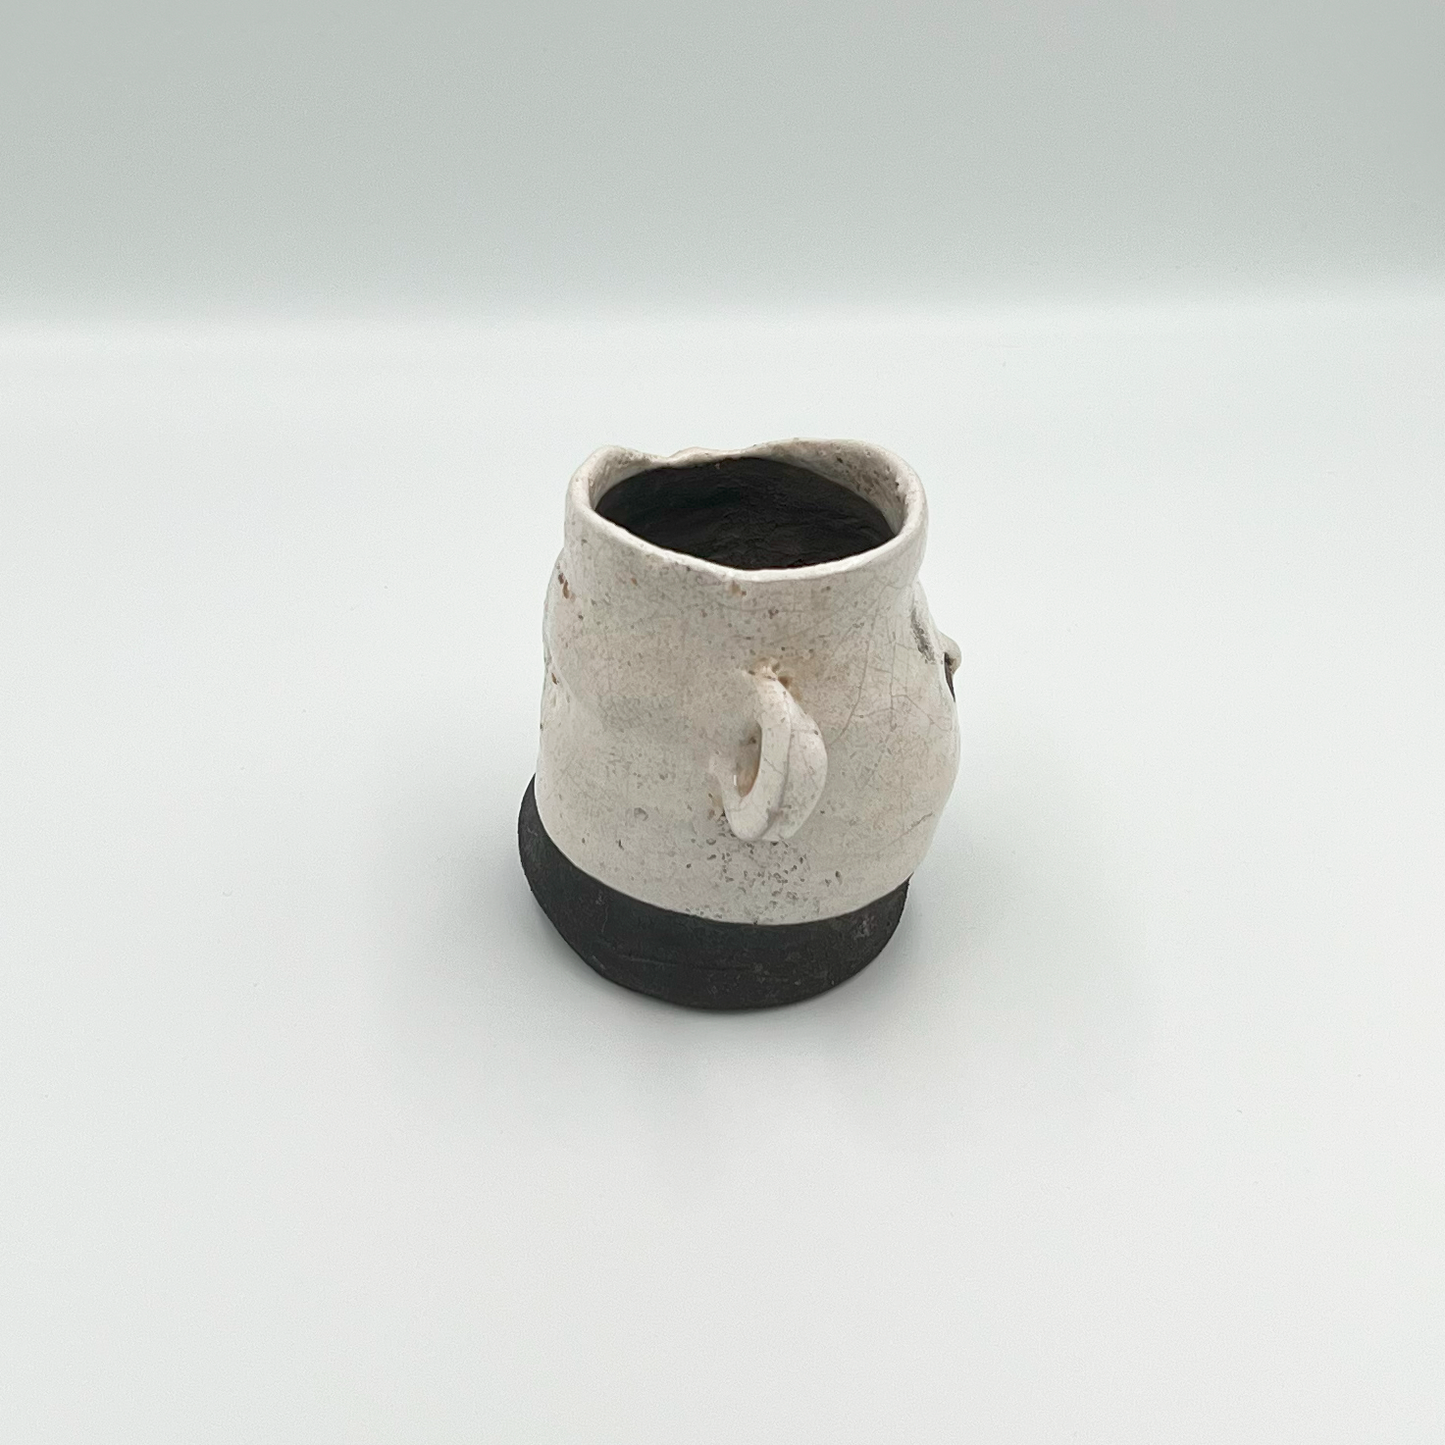 Ear-handled small vase